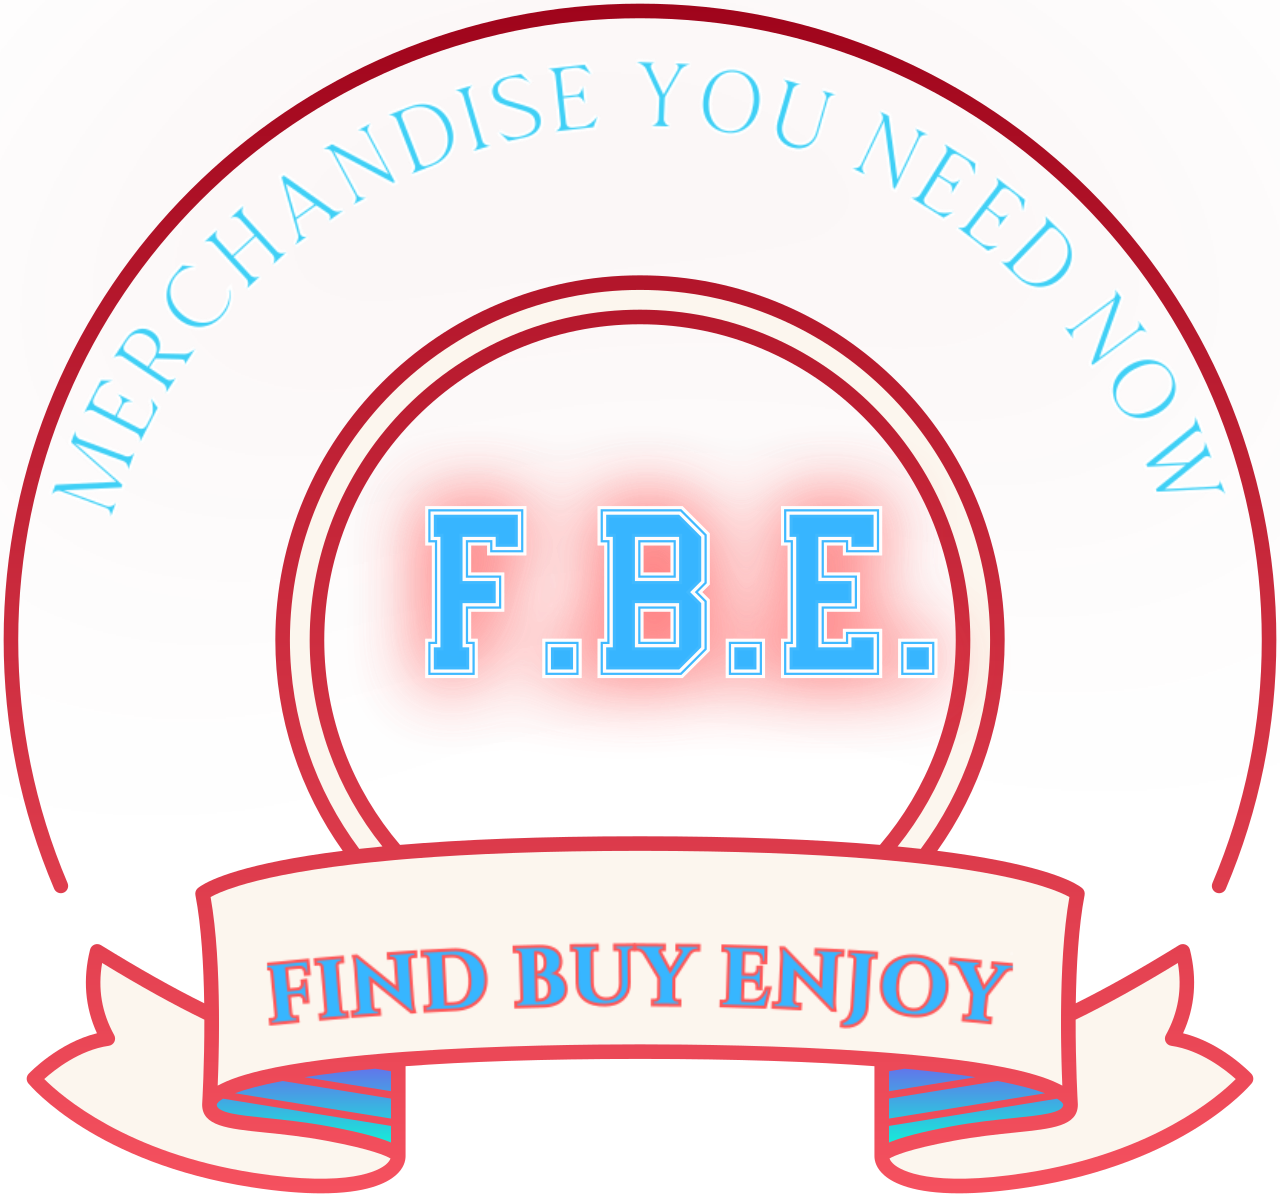 FIND BUY ENJOY's logo